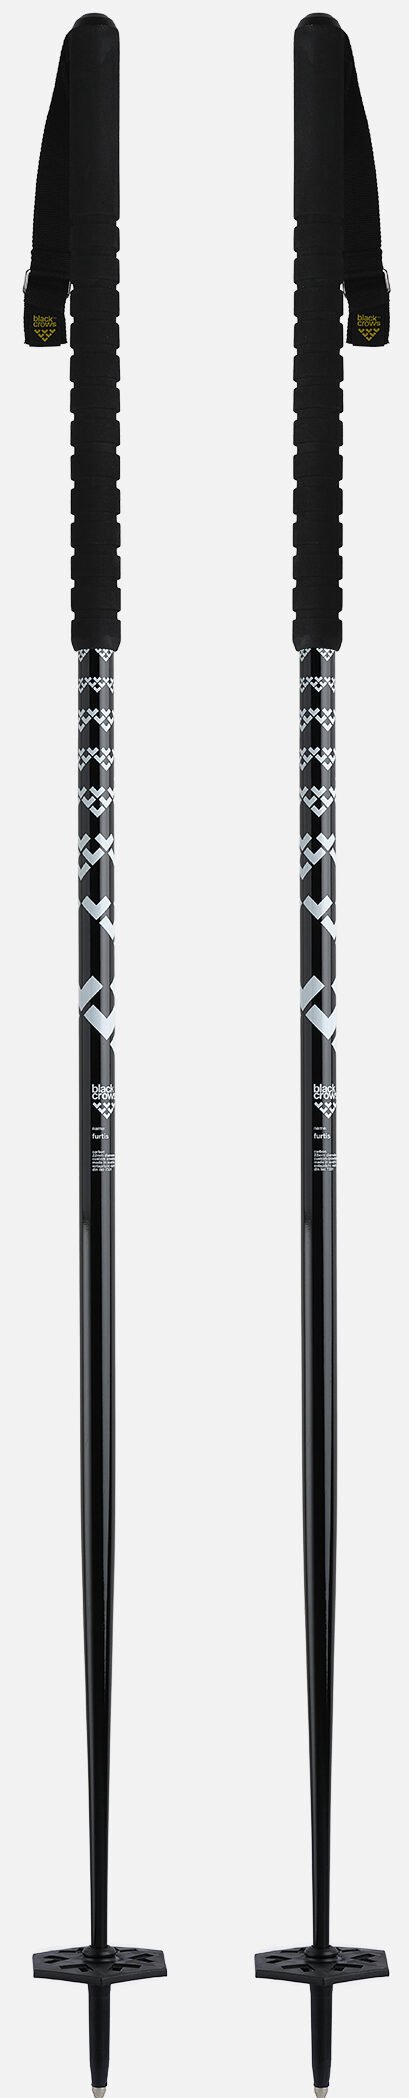 black crows ski poles